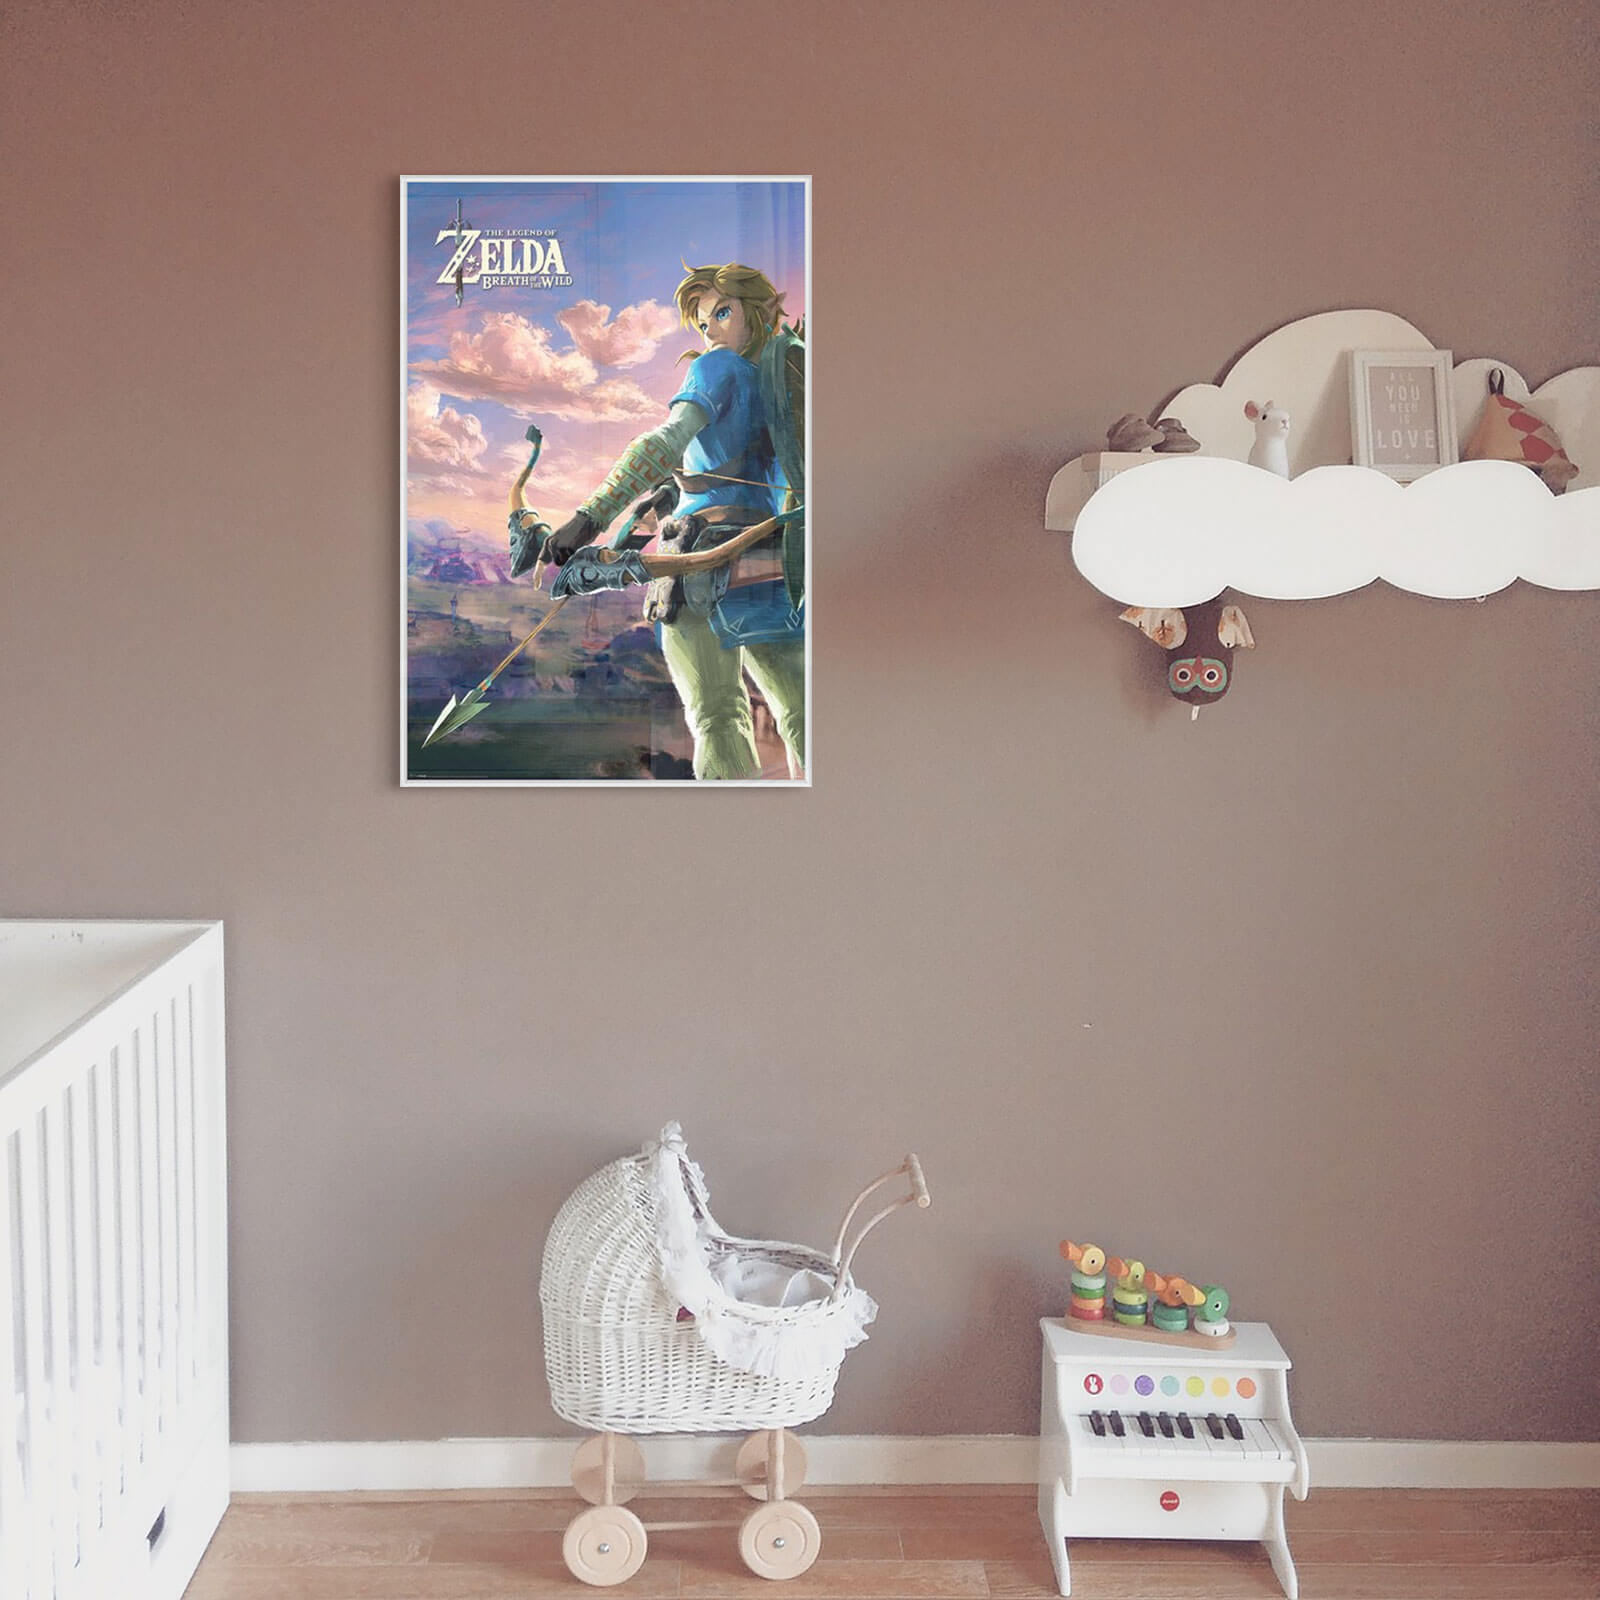 Plakat z gry The Legend of Zelda